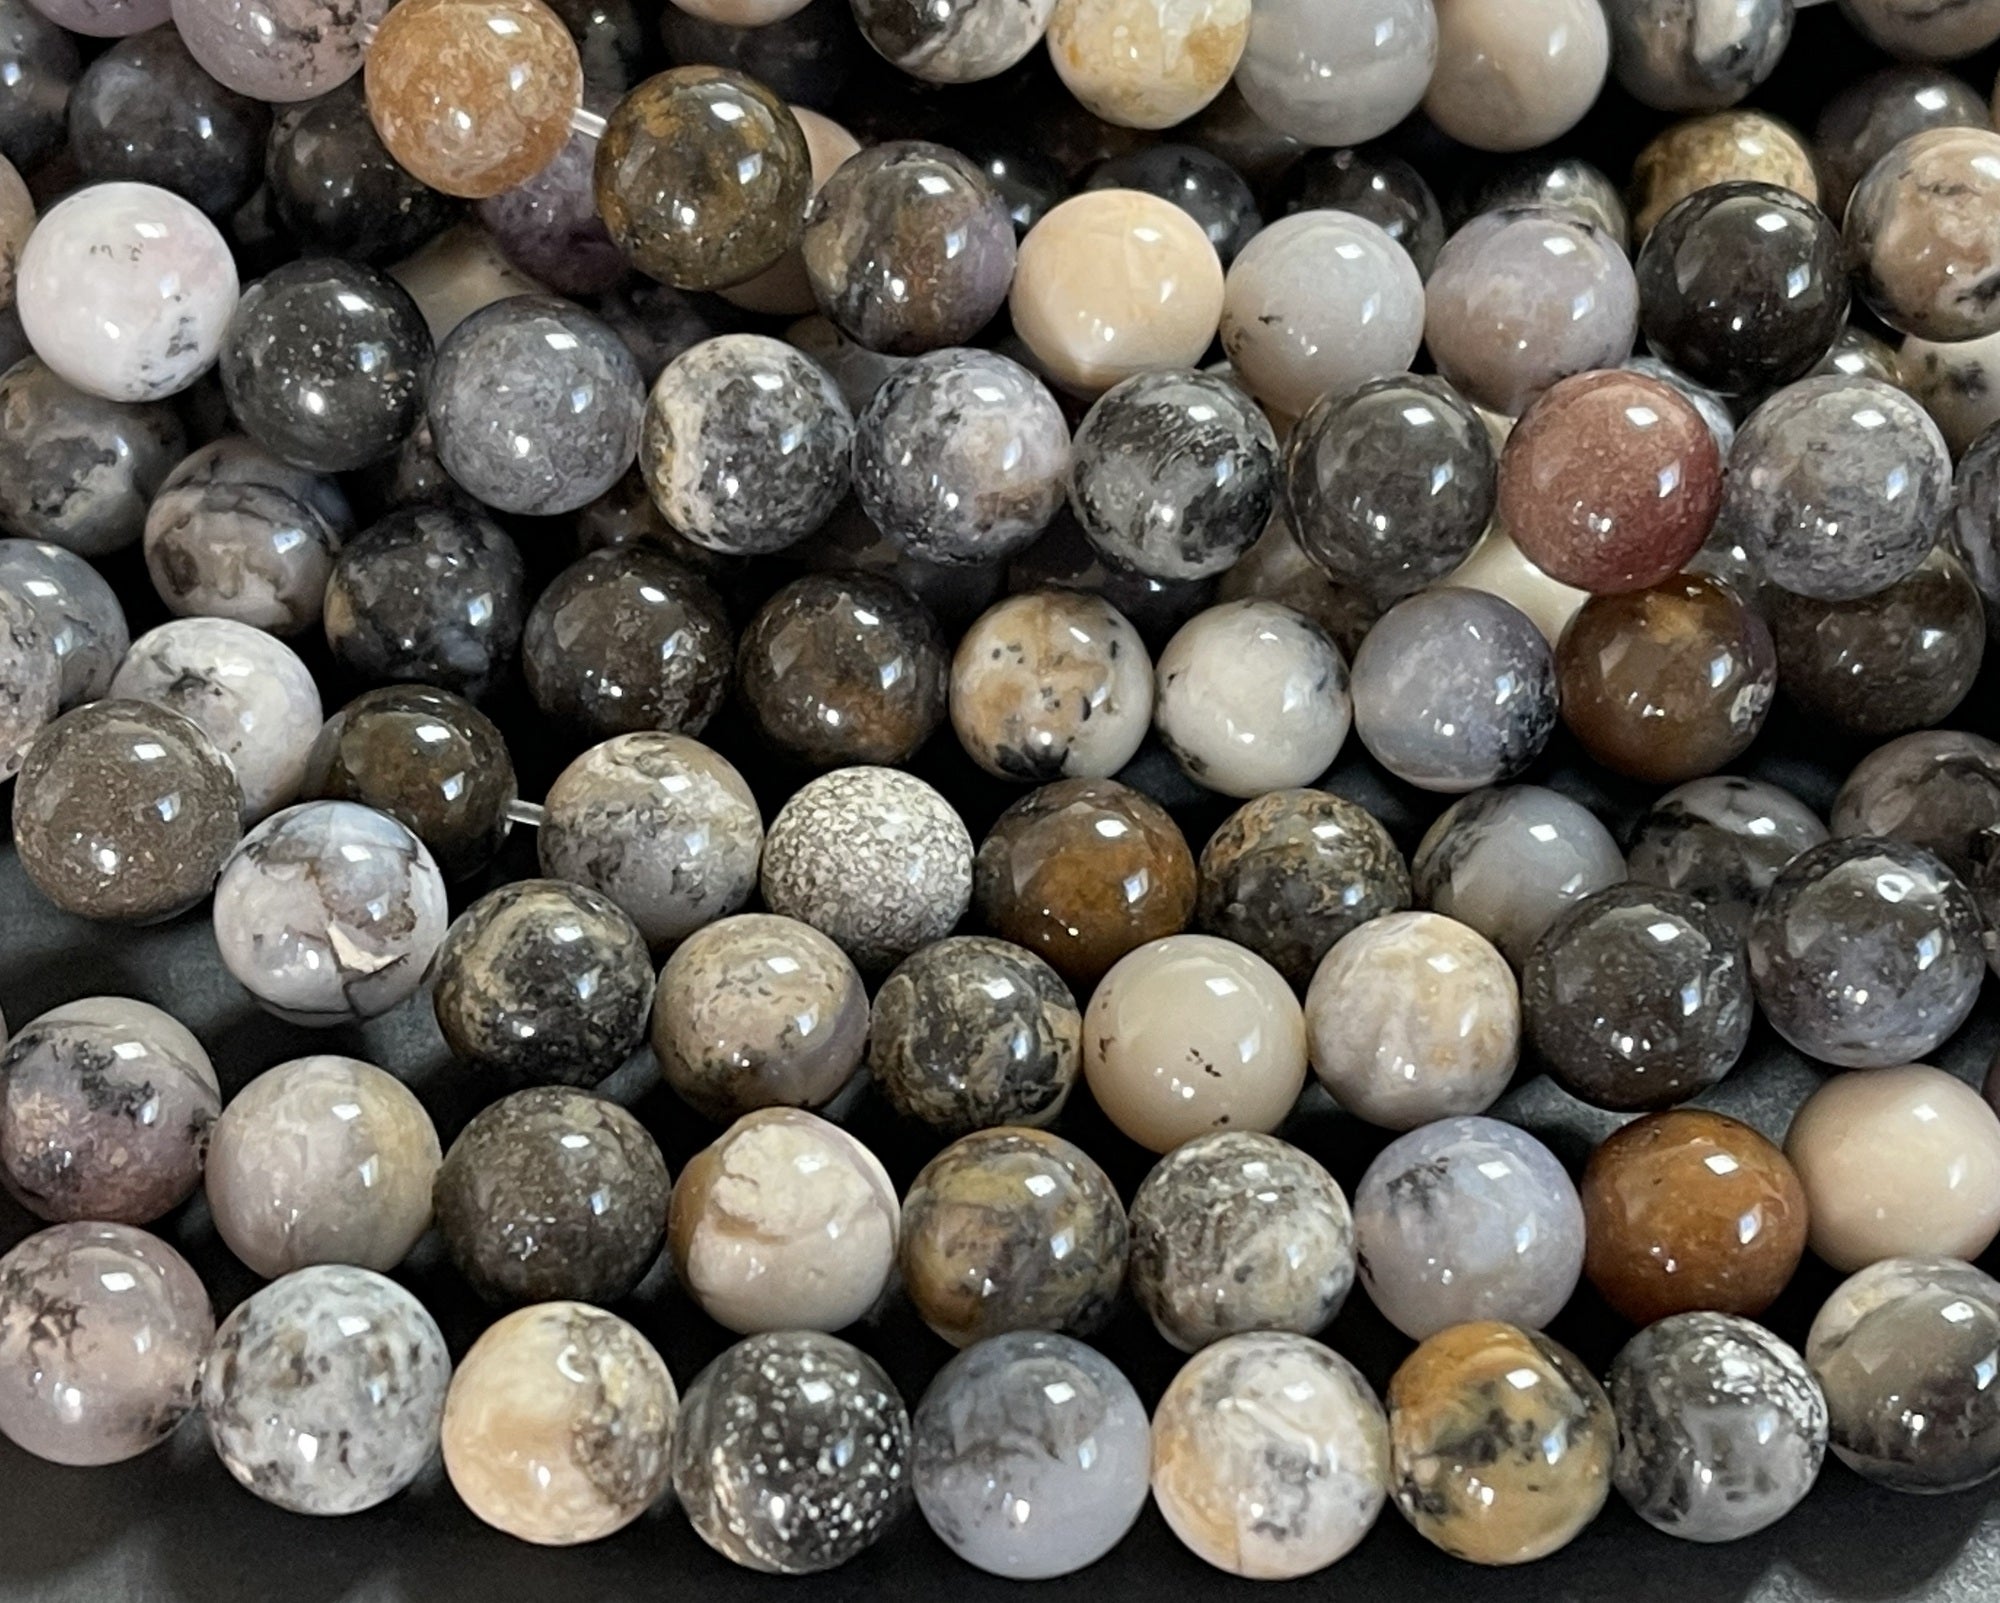 Black Dendritic Opal 8mm round natural gemstone beads 15" strand